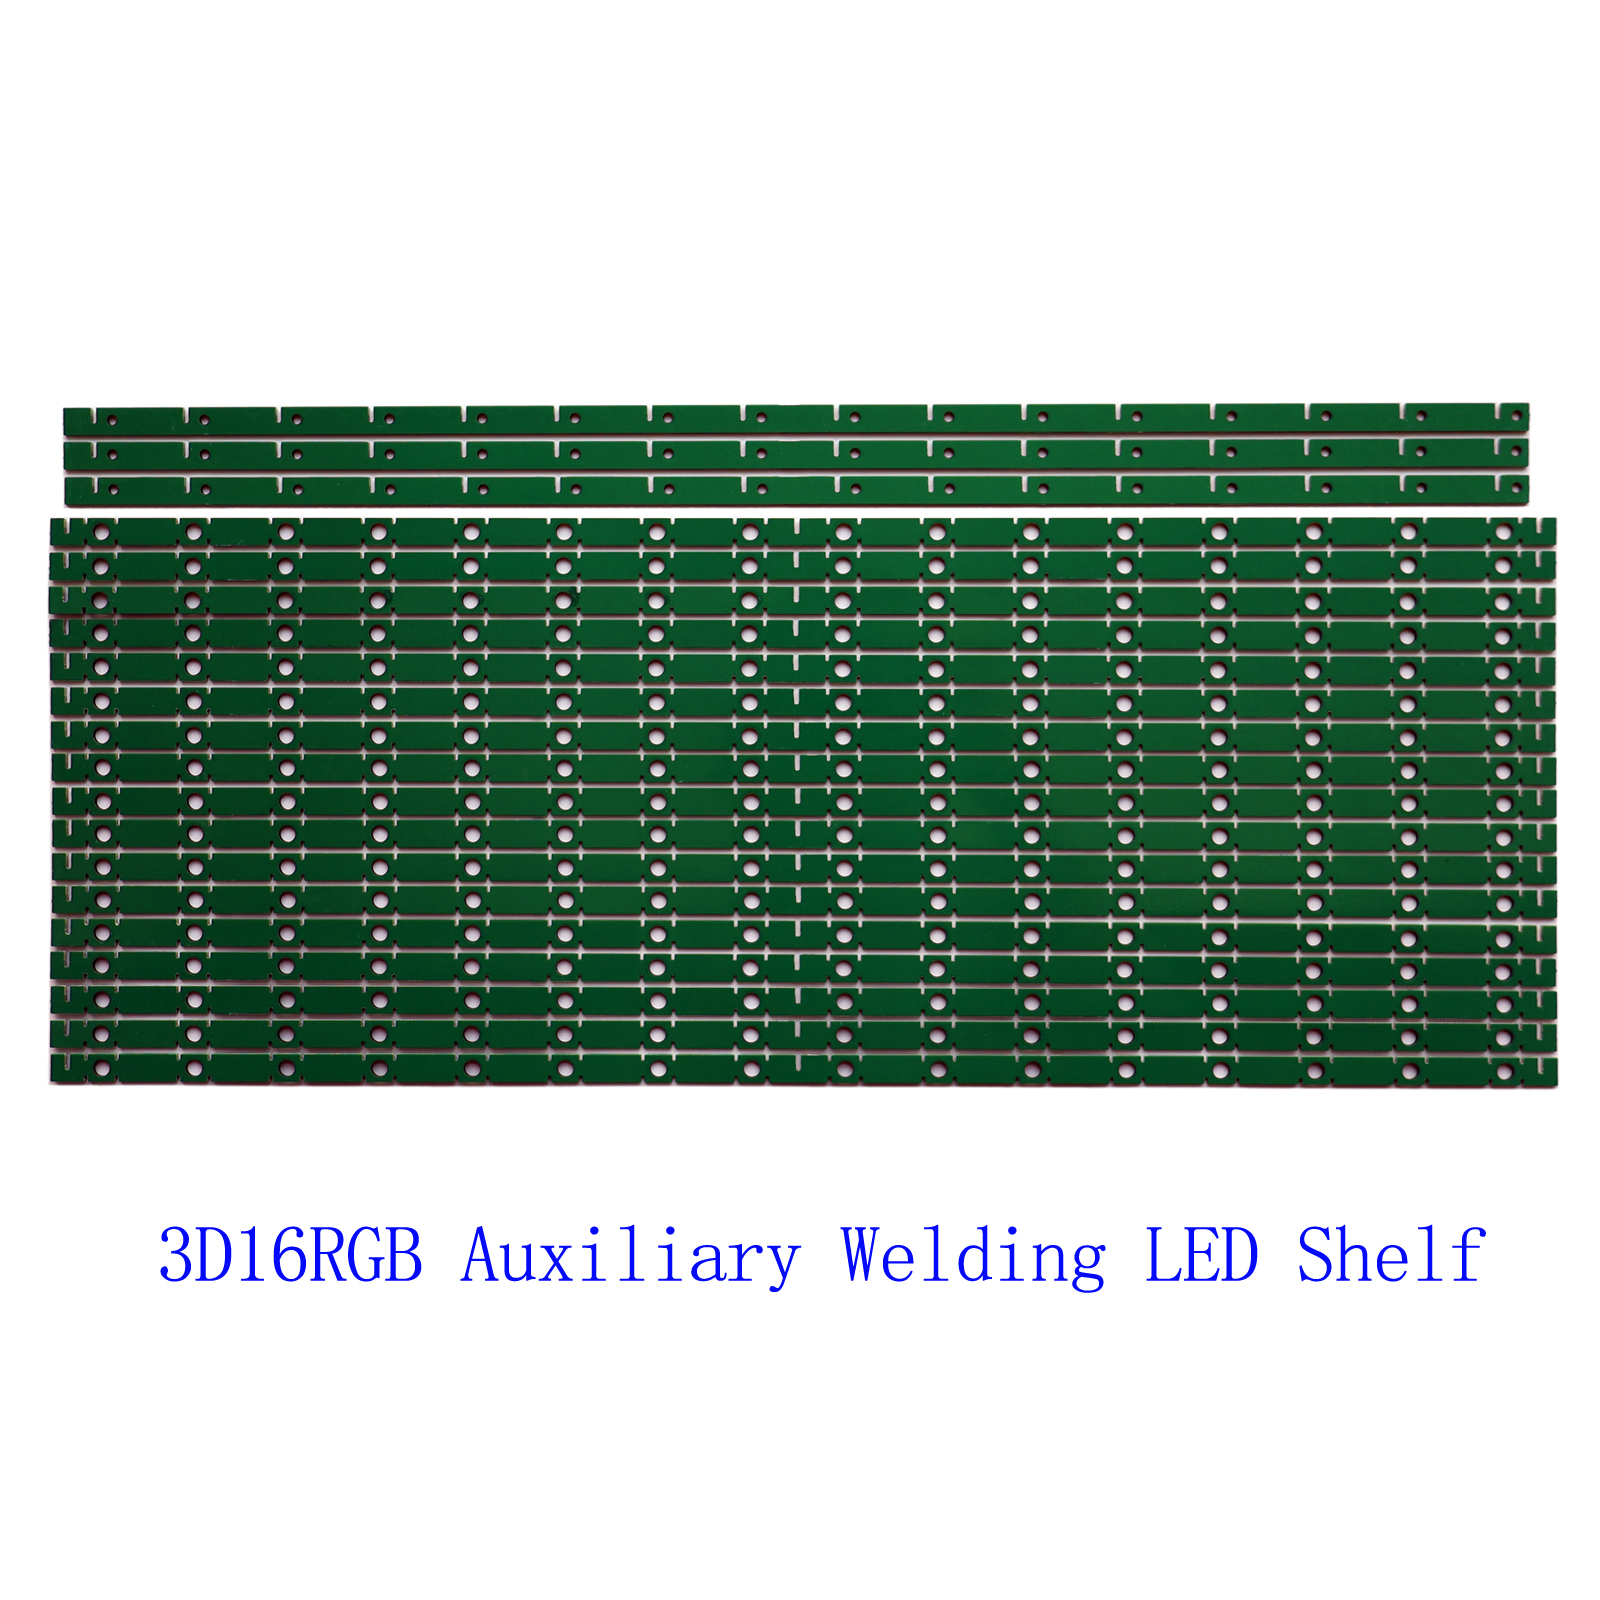 3D16RGB Auxiliary Welding LED Shelf